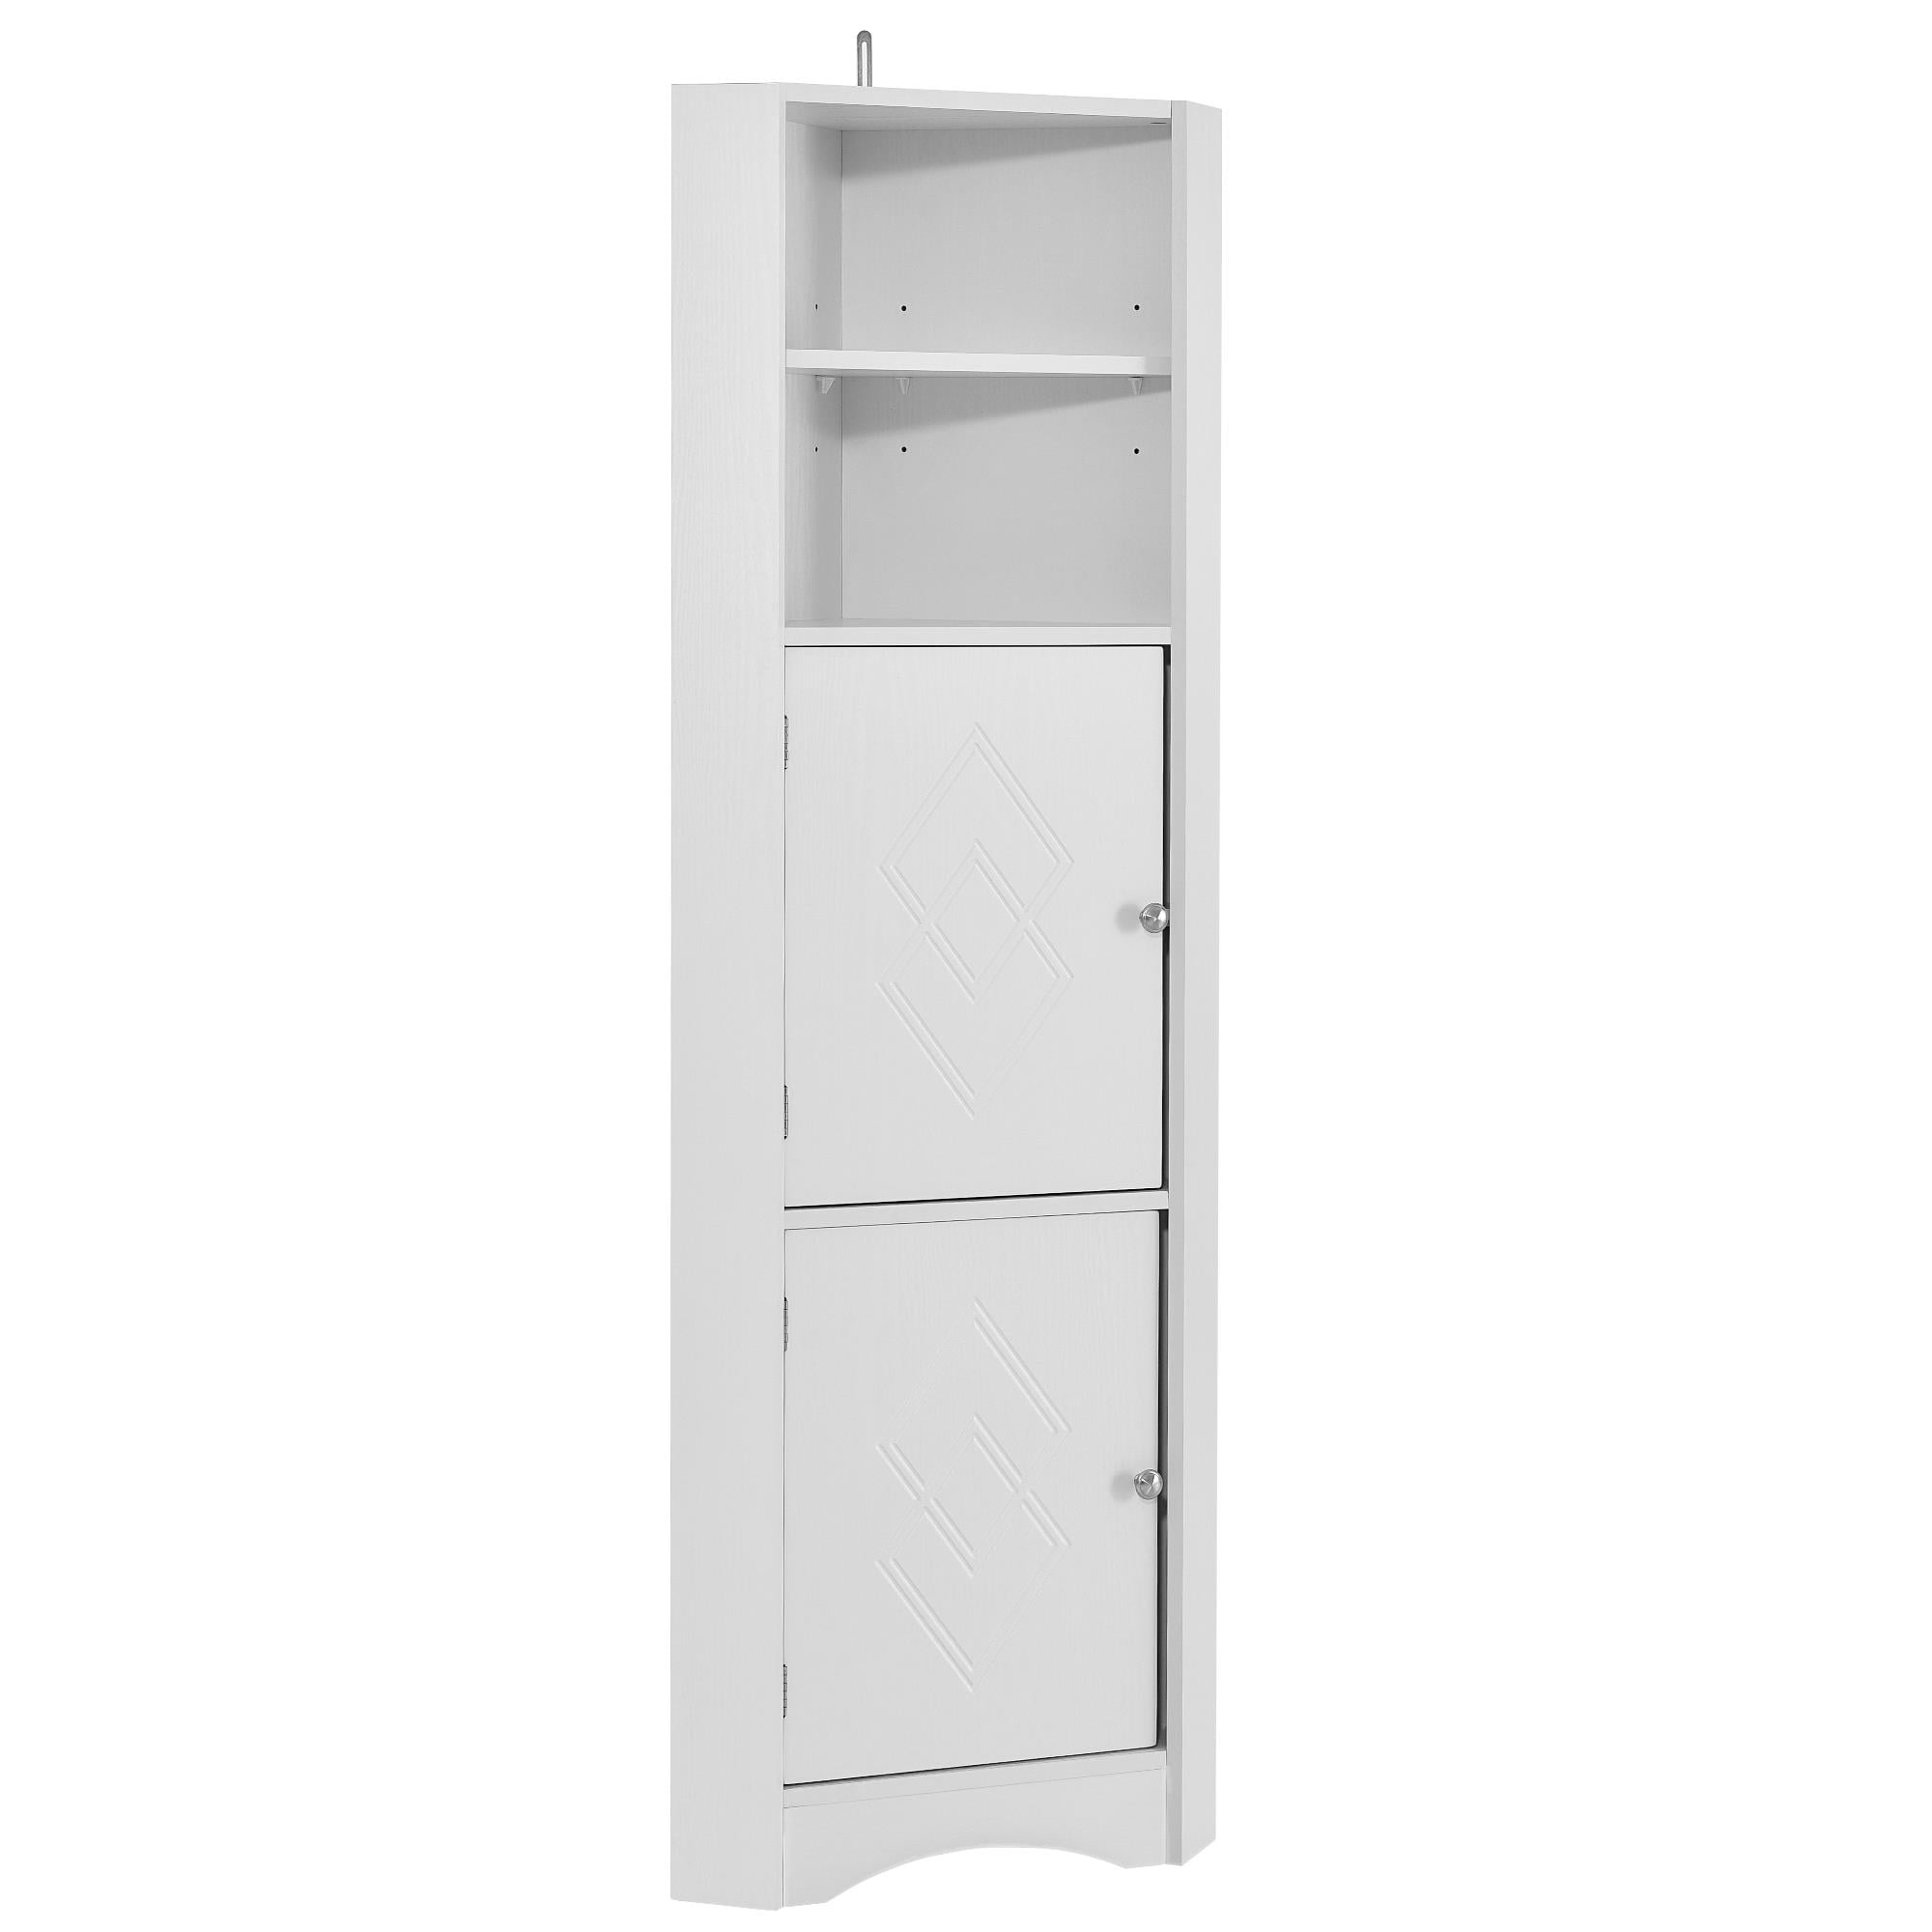 Ktaxon Rolling Narrow Bathroom Side Storage Cabinet Organizer Rack